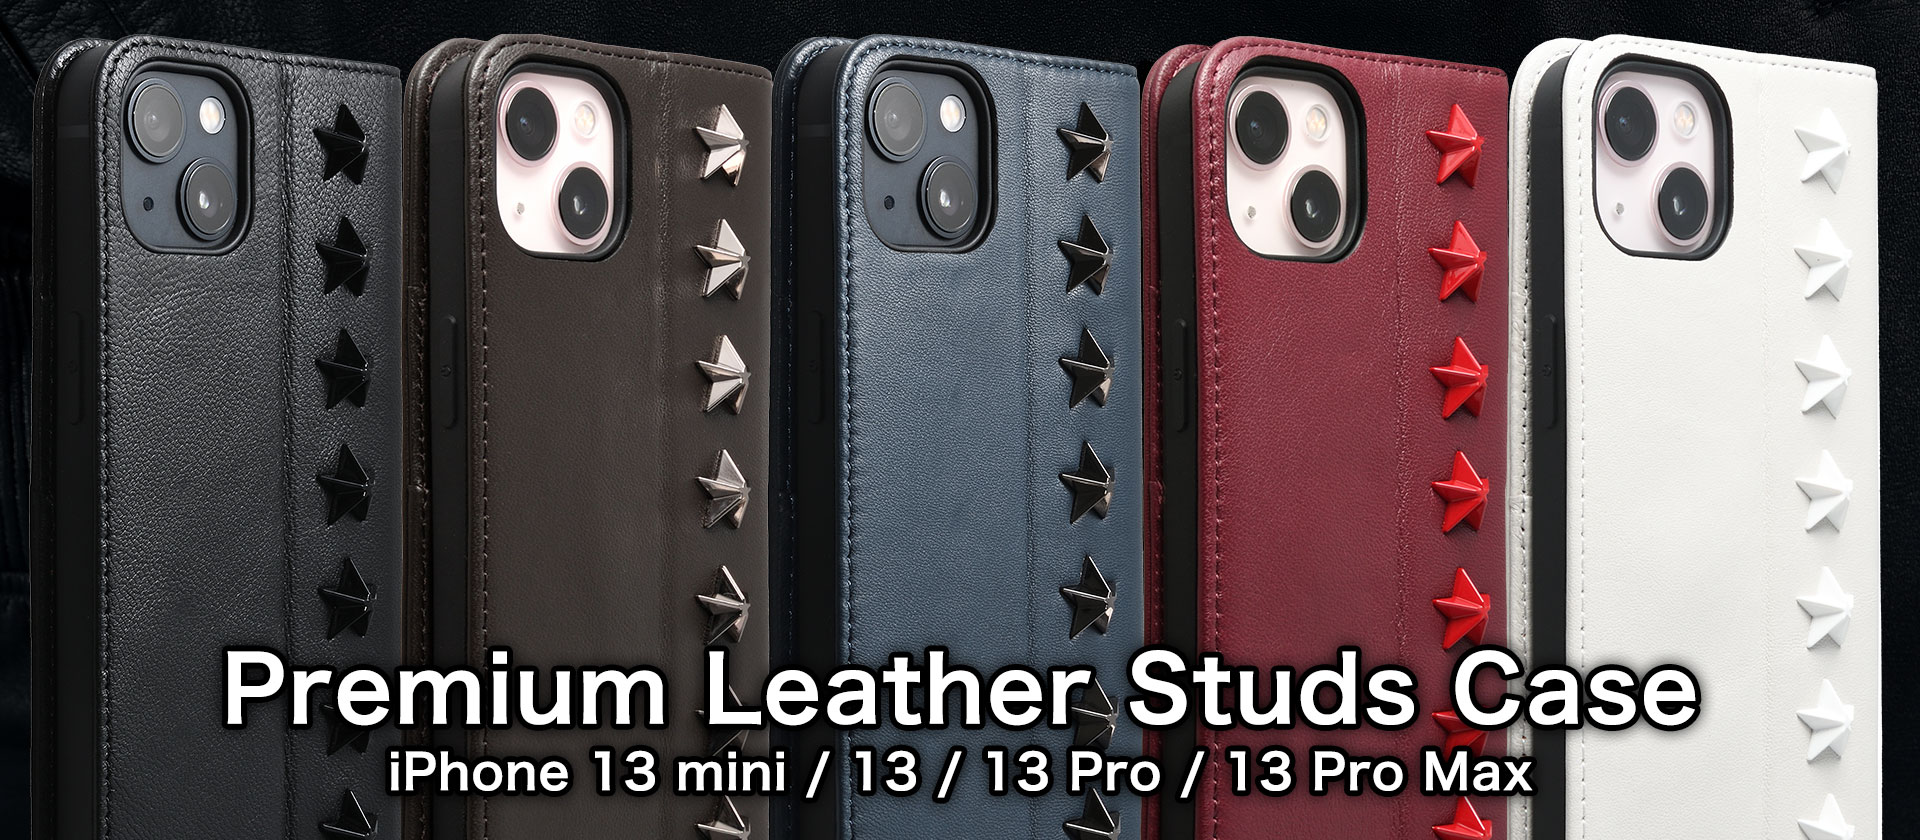 Premium Leather Studs Case for iPhone 13 新登場!!